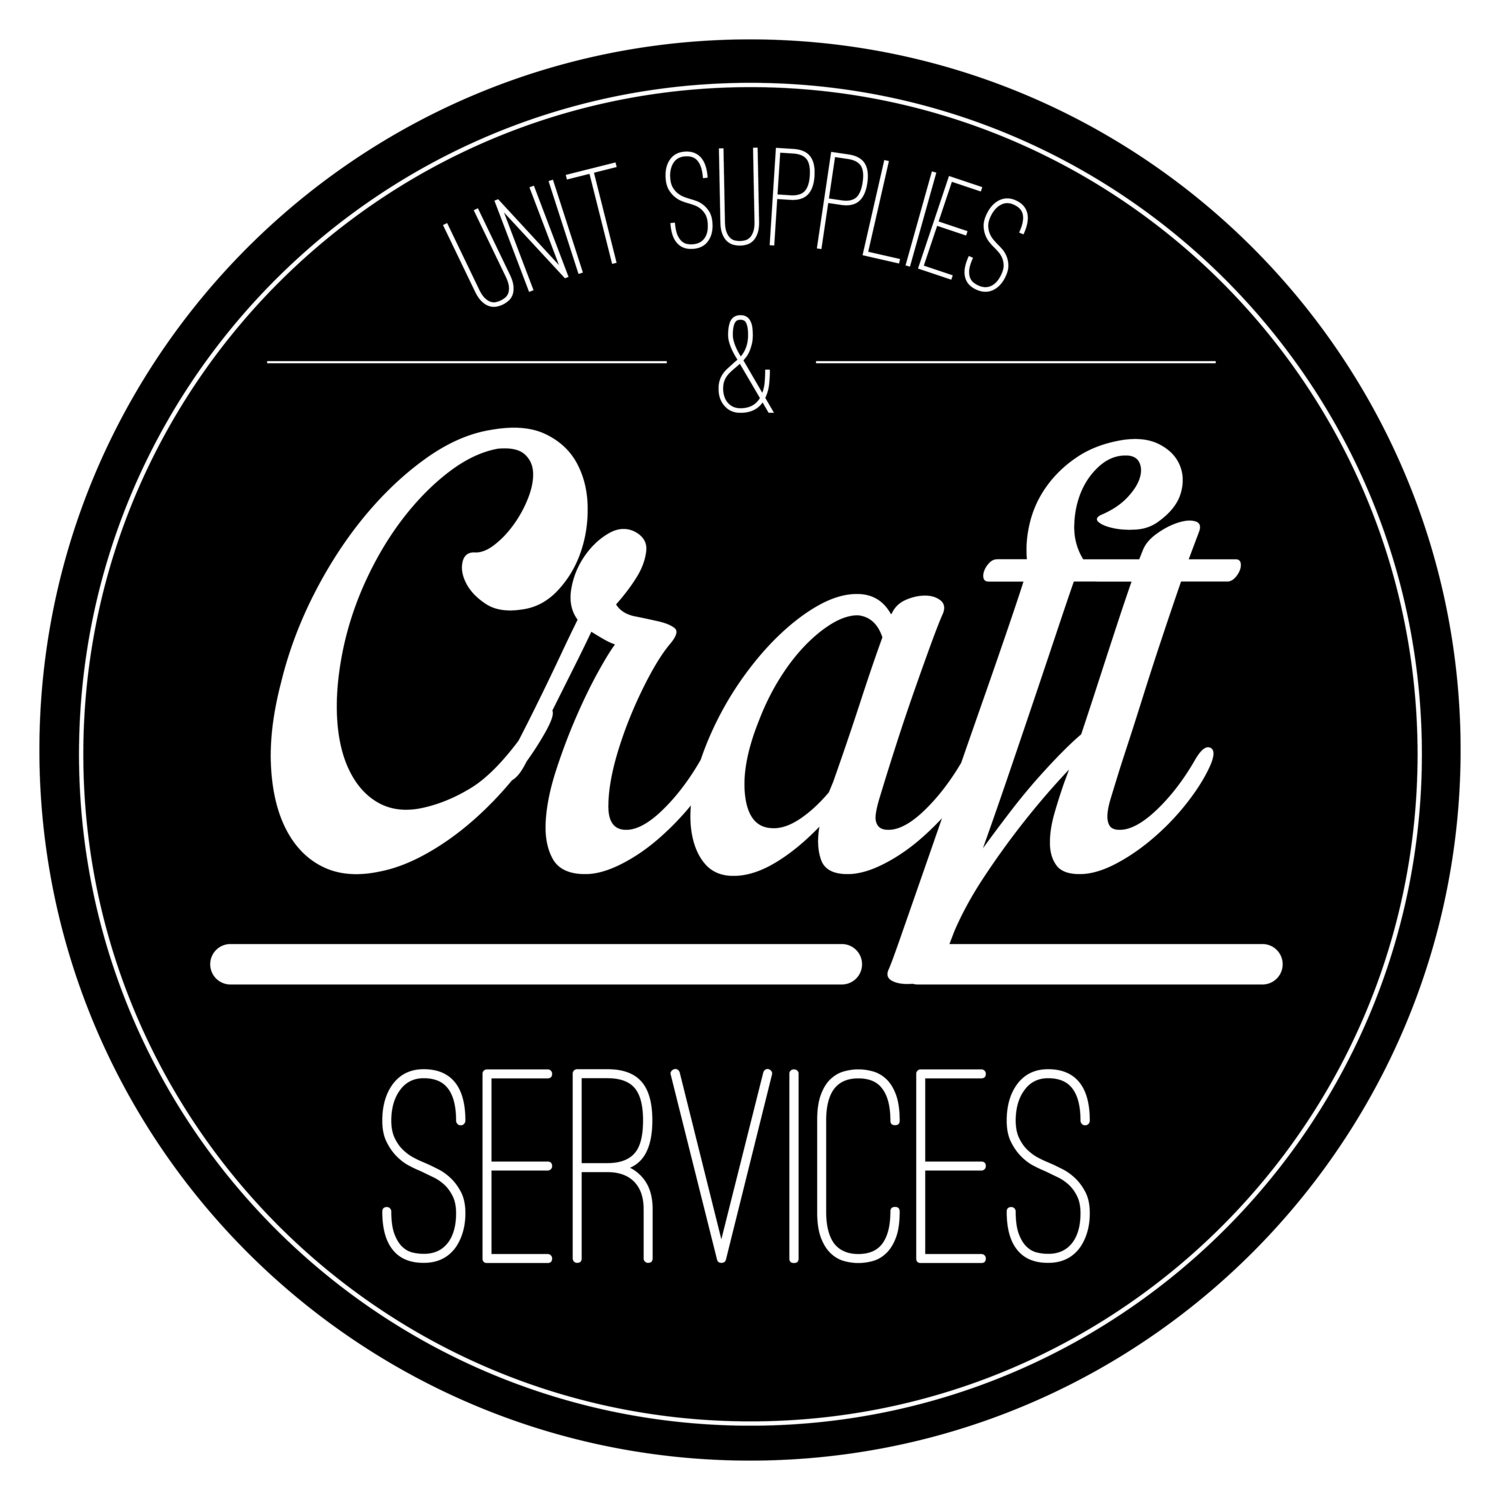 Craft Services